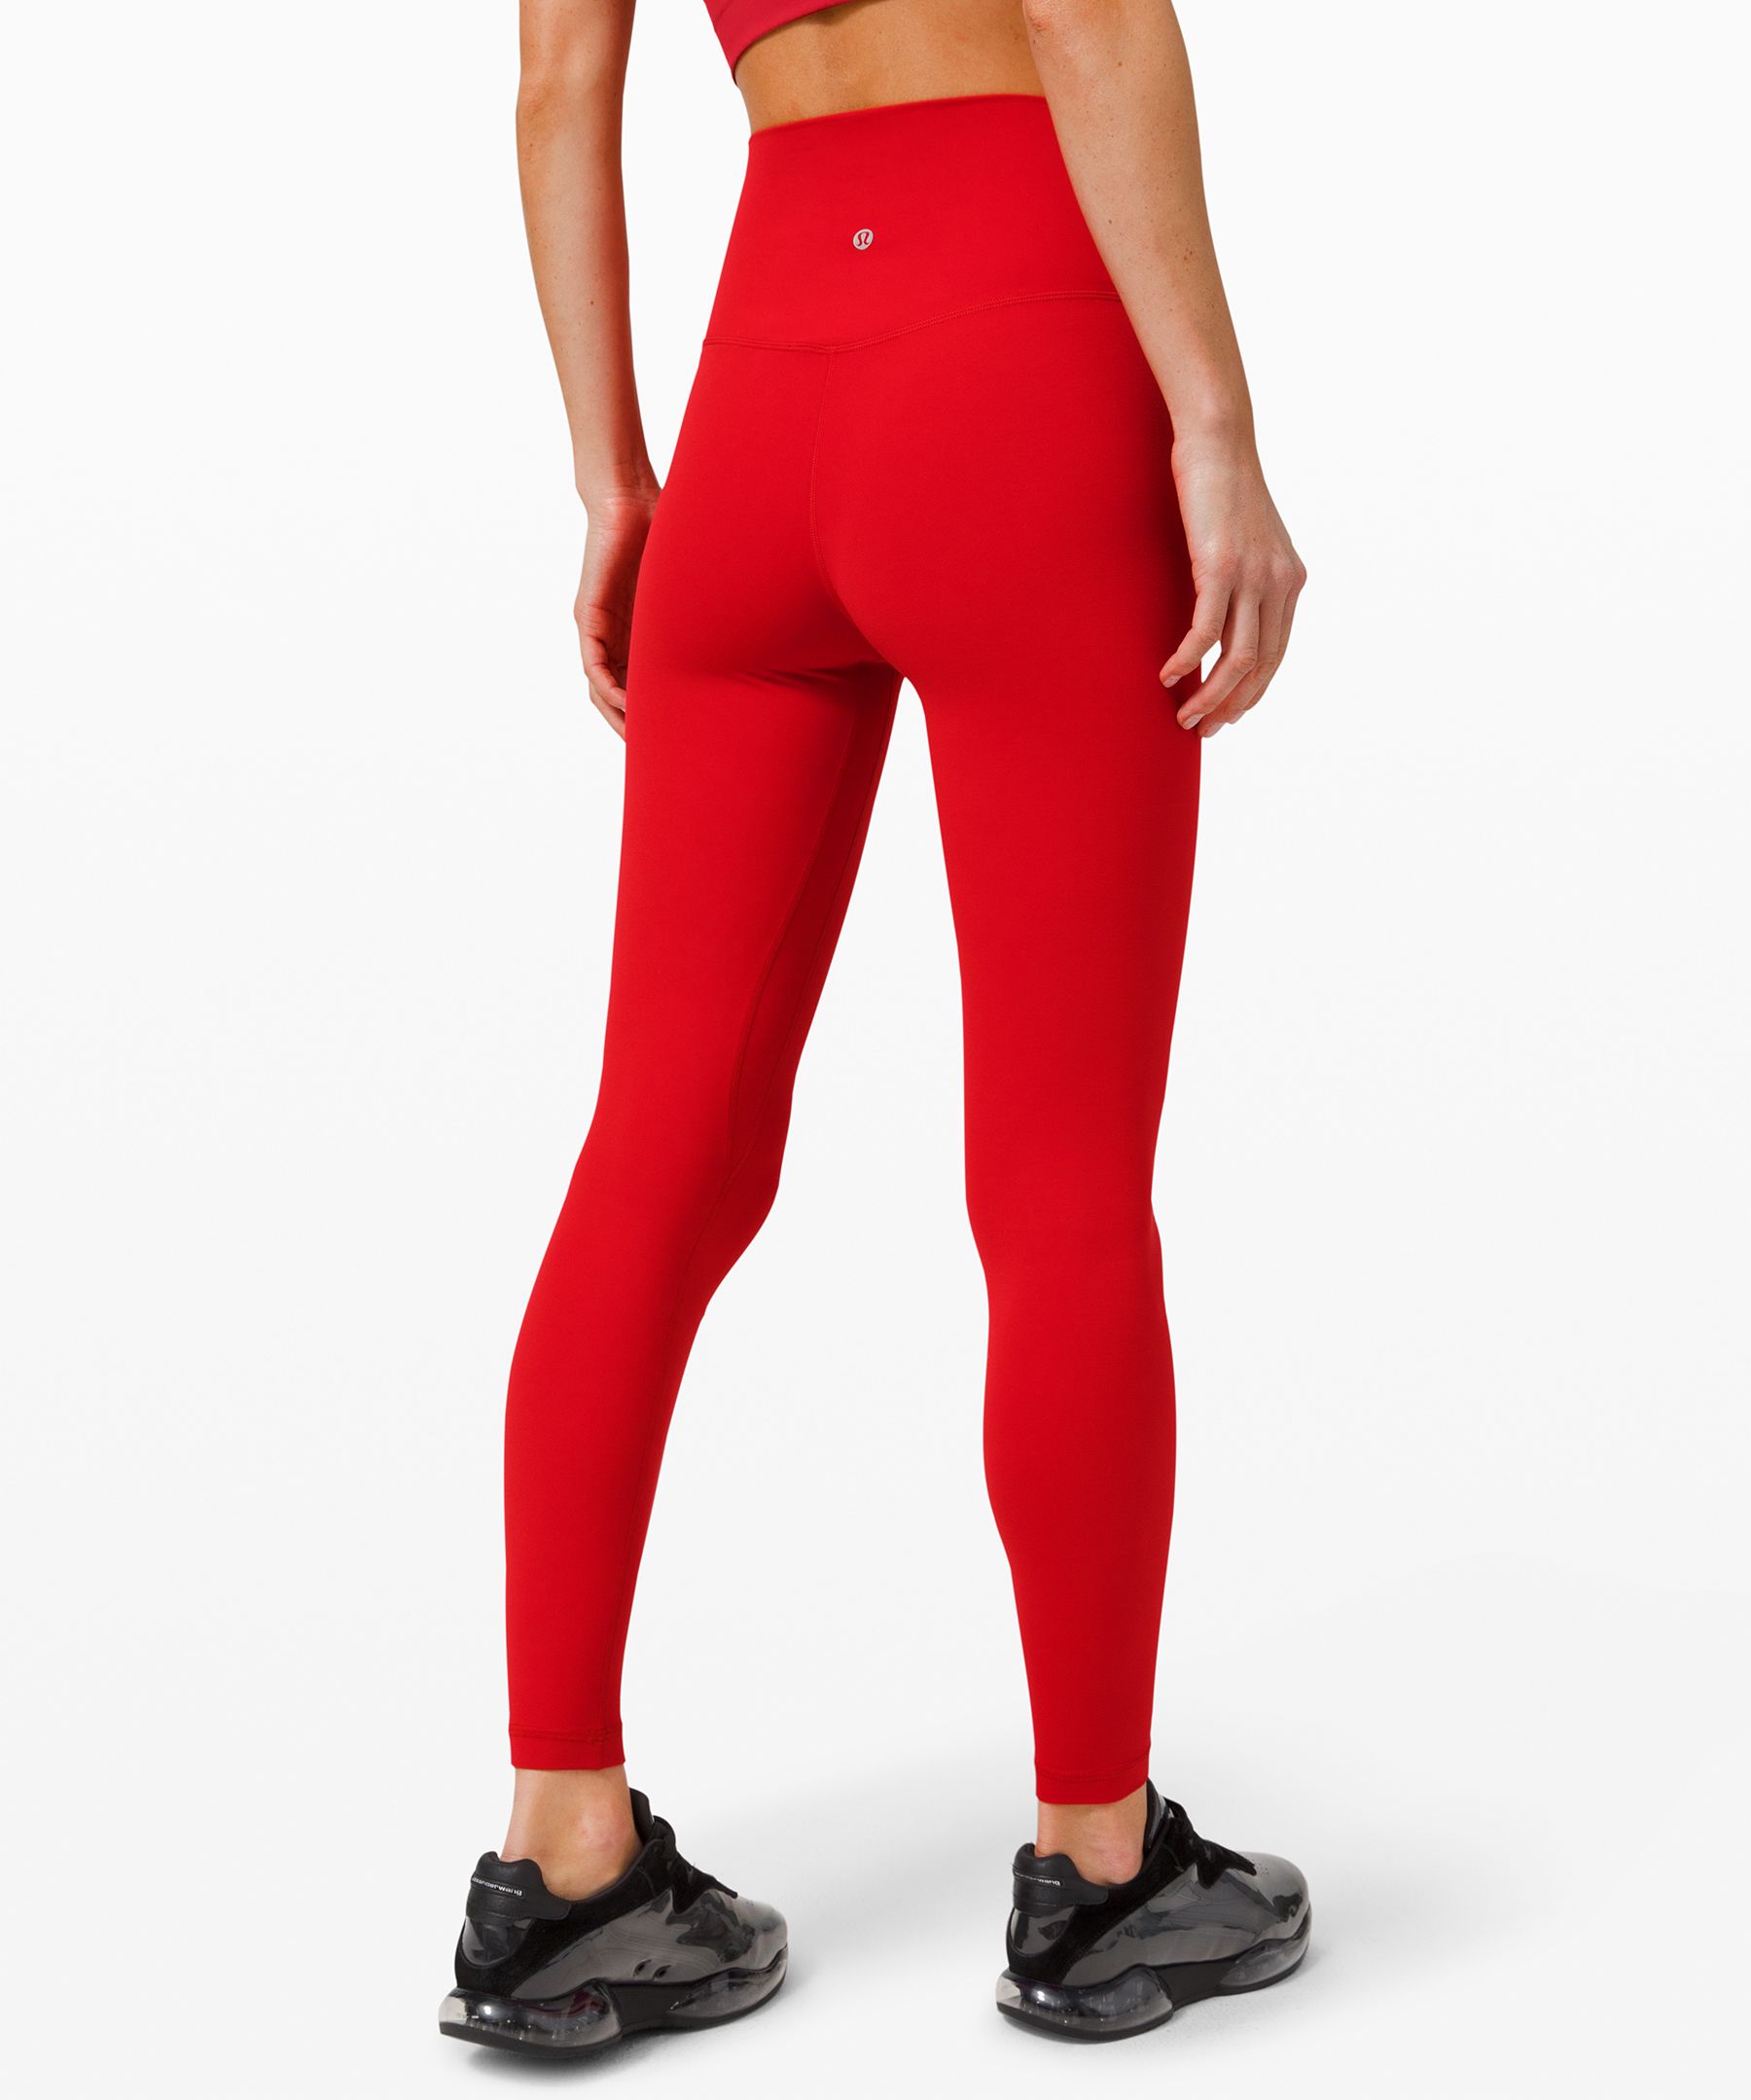 lululemon red align pants, OFF 79%,Buy!